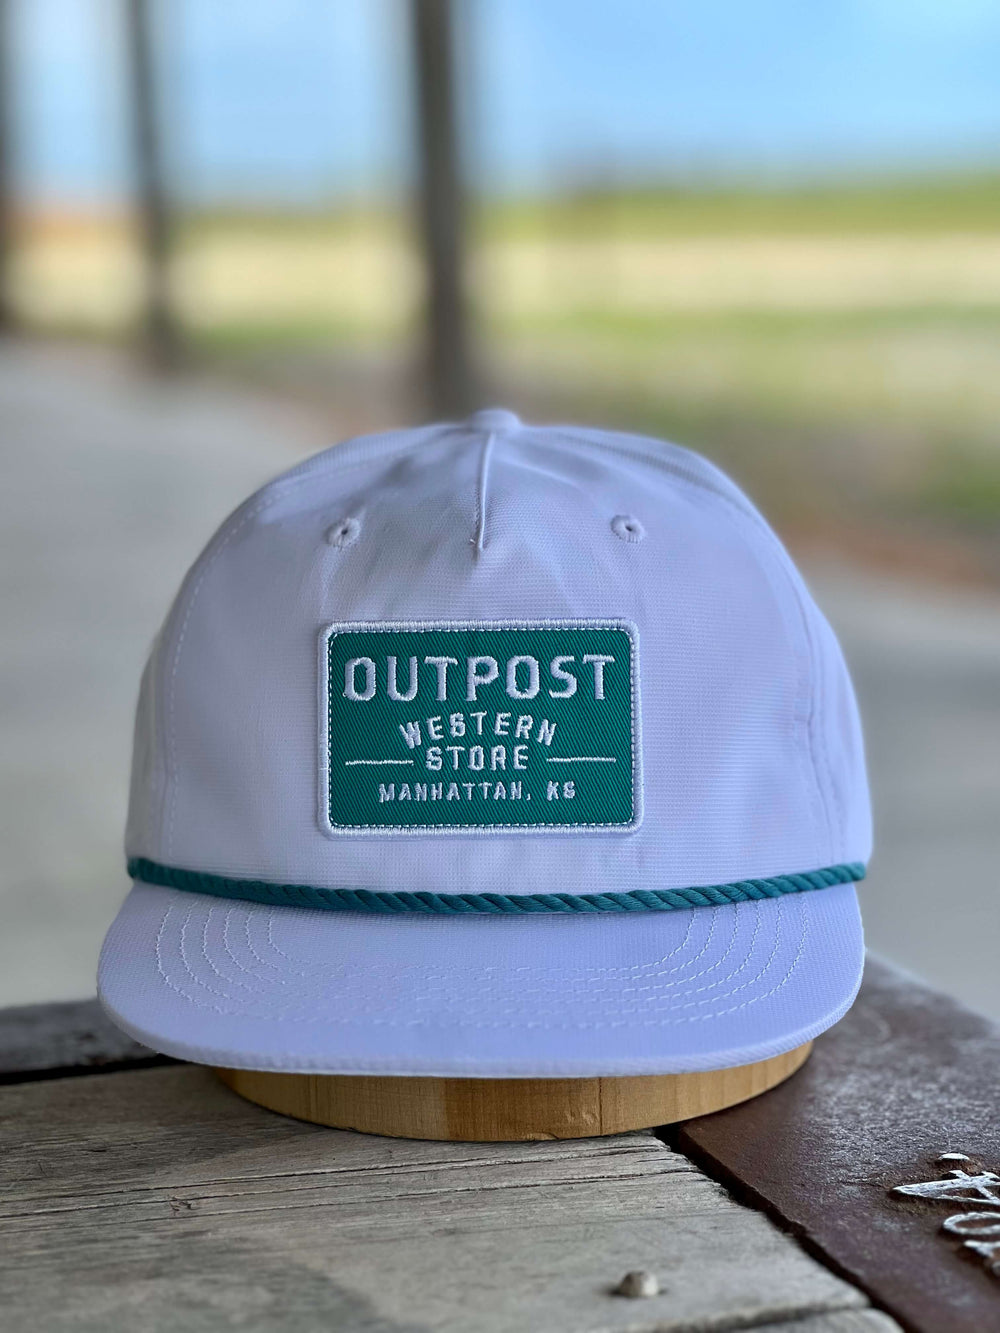 Outpost Original Rope Cap White/Teal